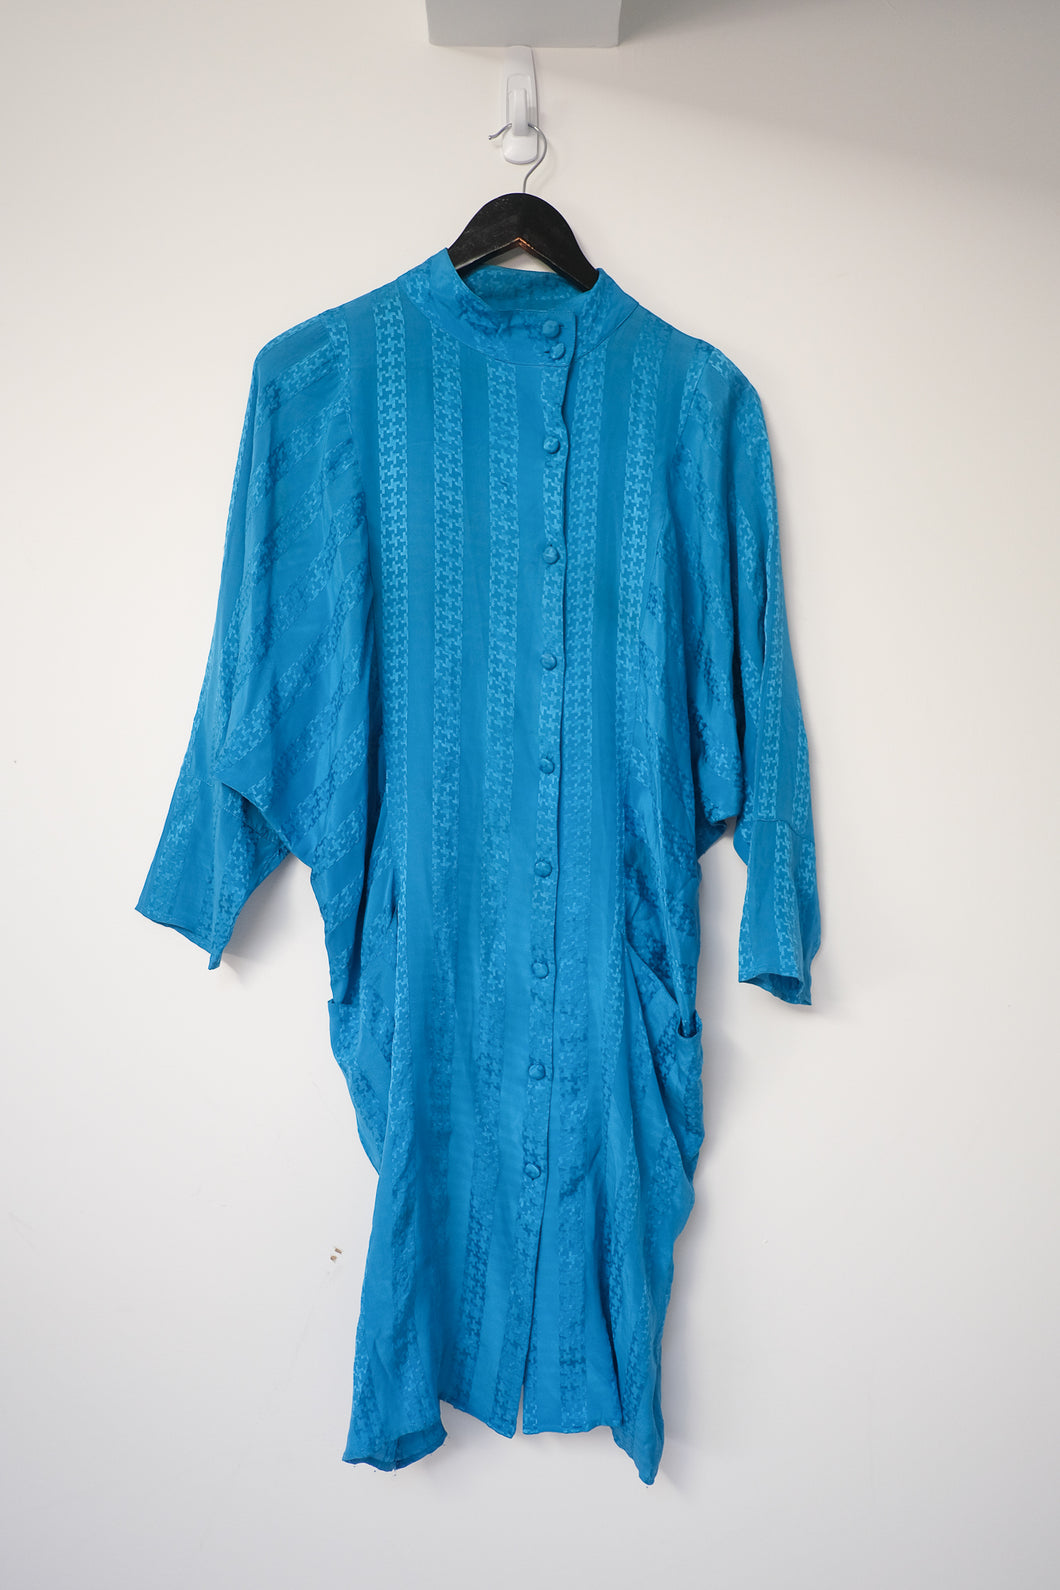 80s batwing silk dress